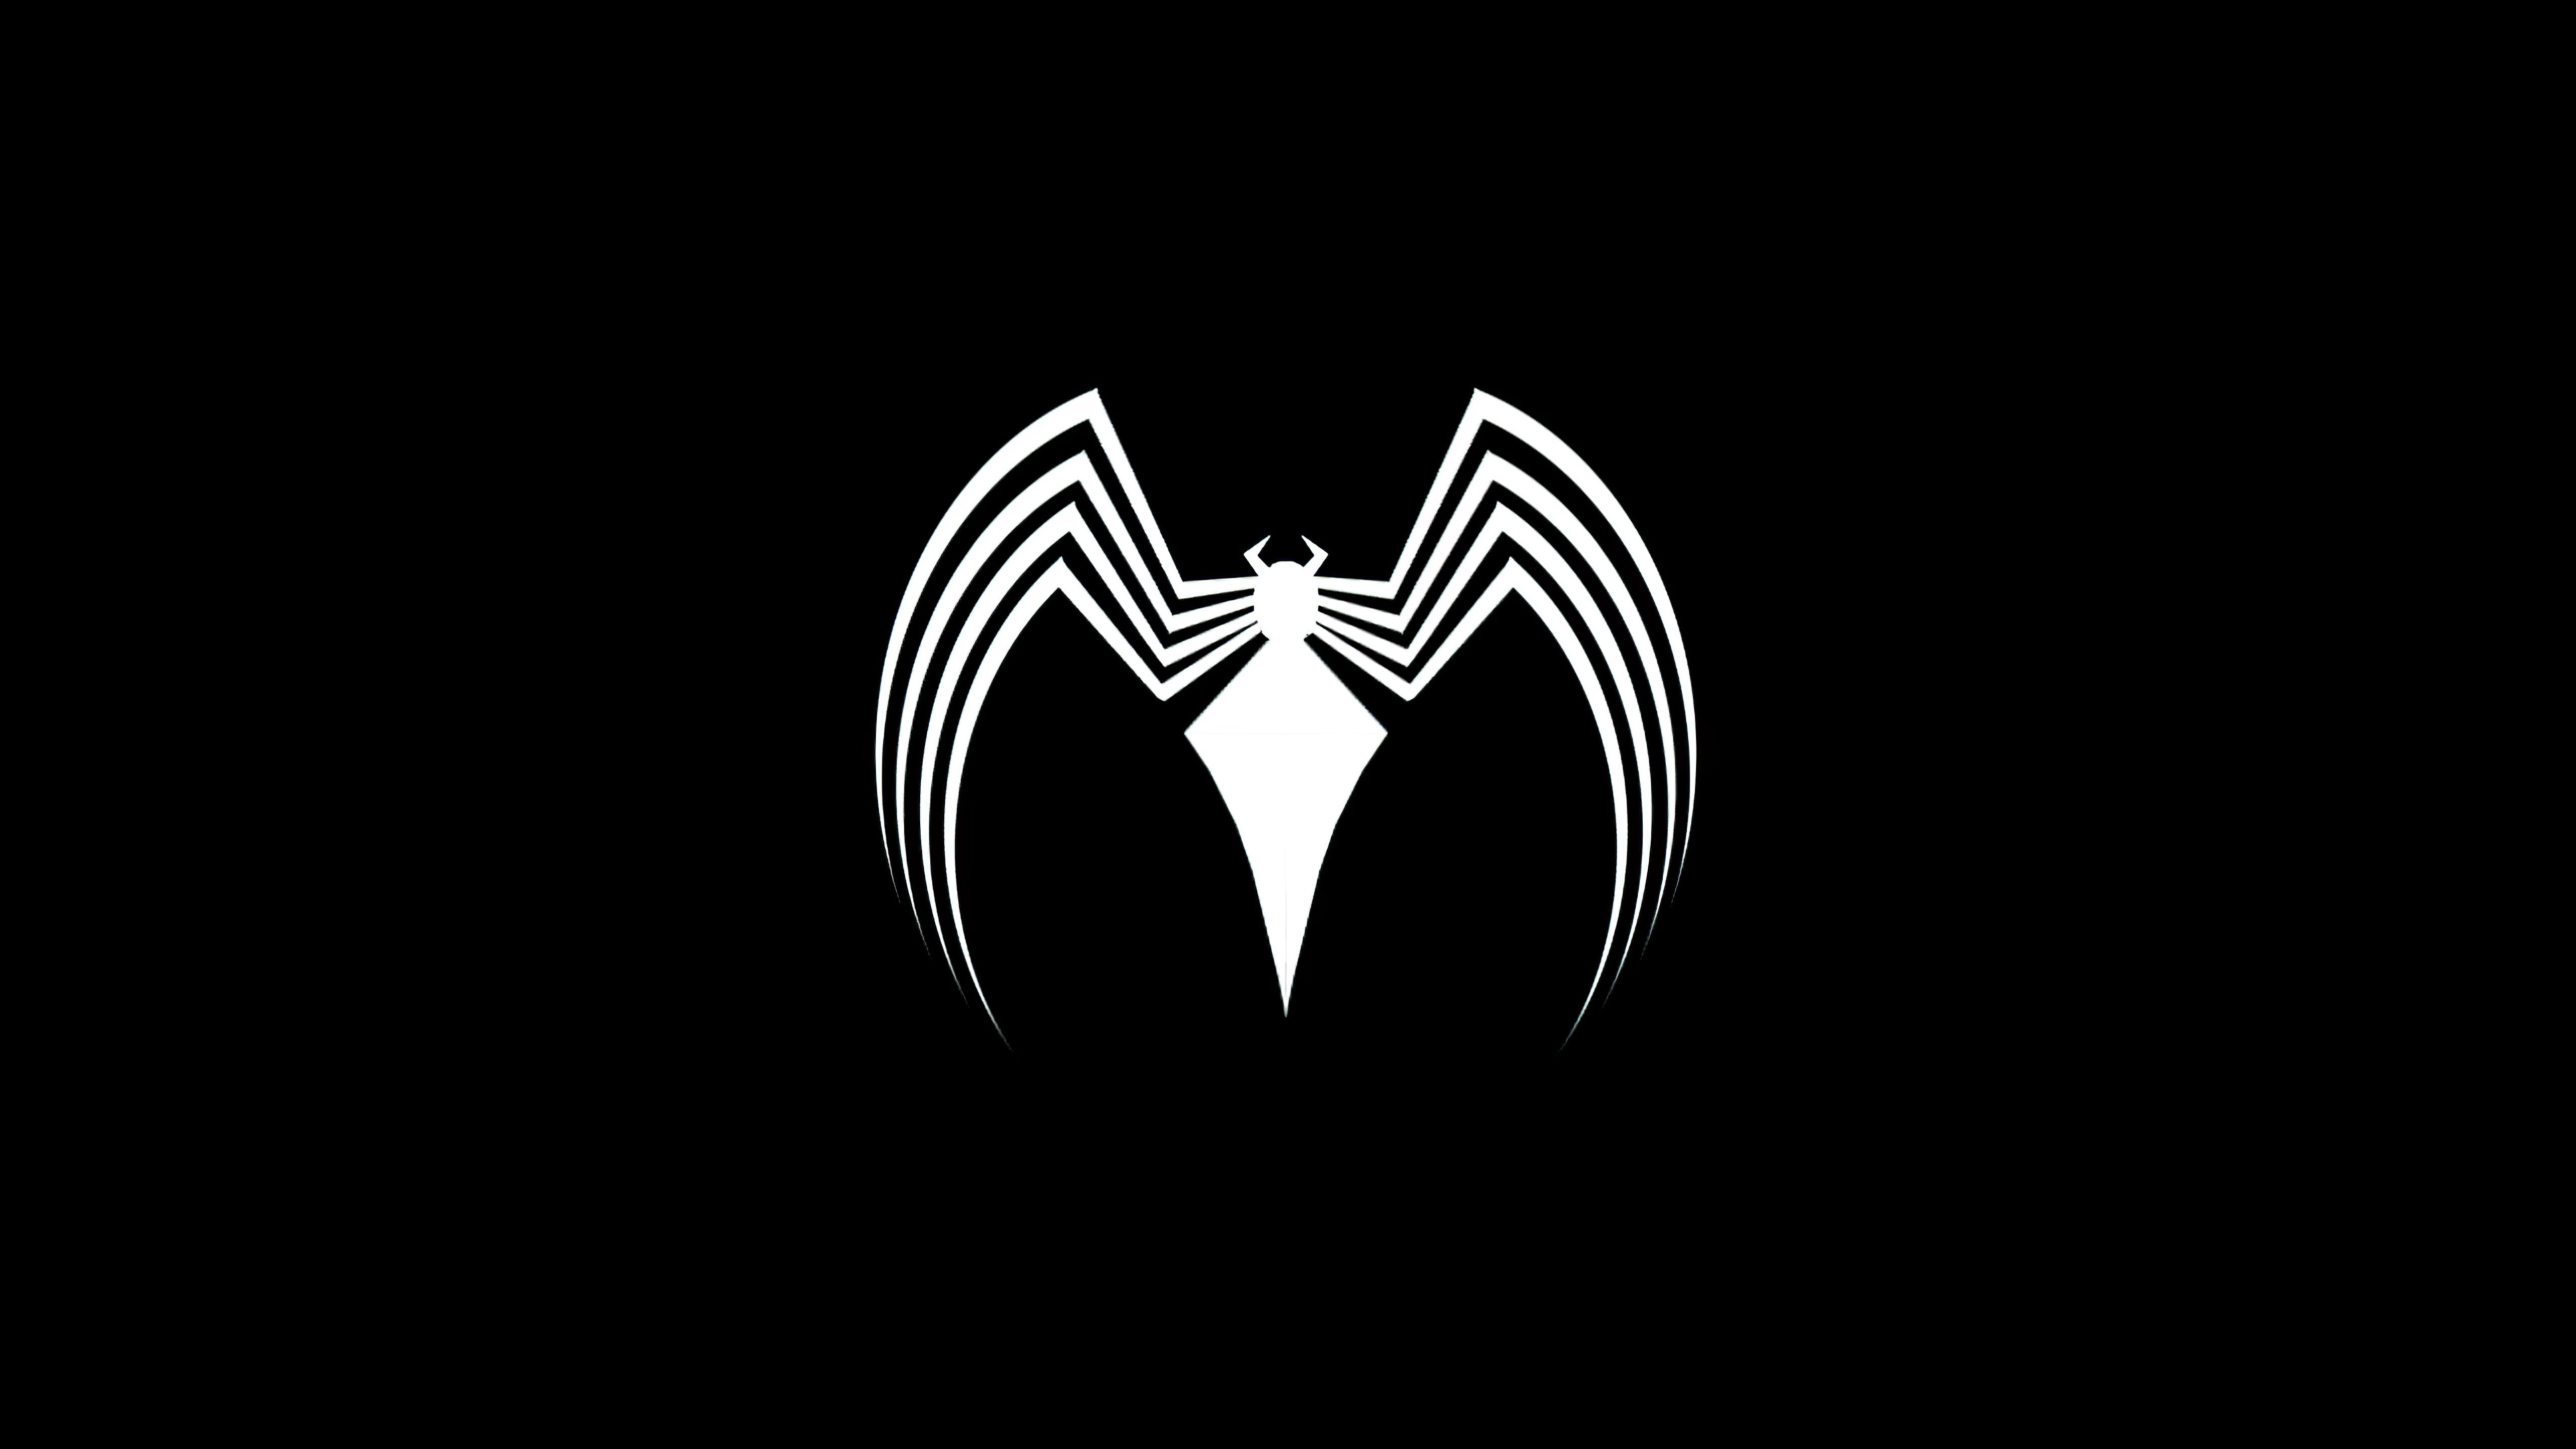 Venom Logo Dark 4k, HD Superheroes, 4k Wallpaper, Image, Background, Photo and Picture